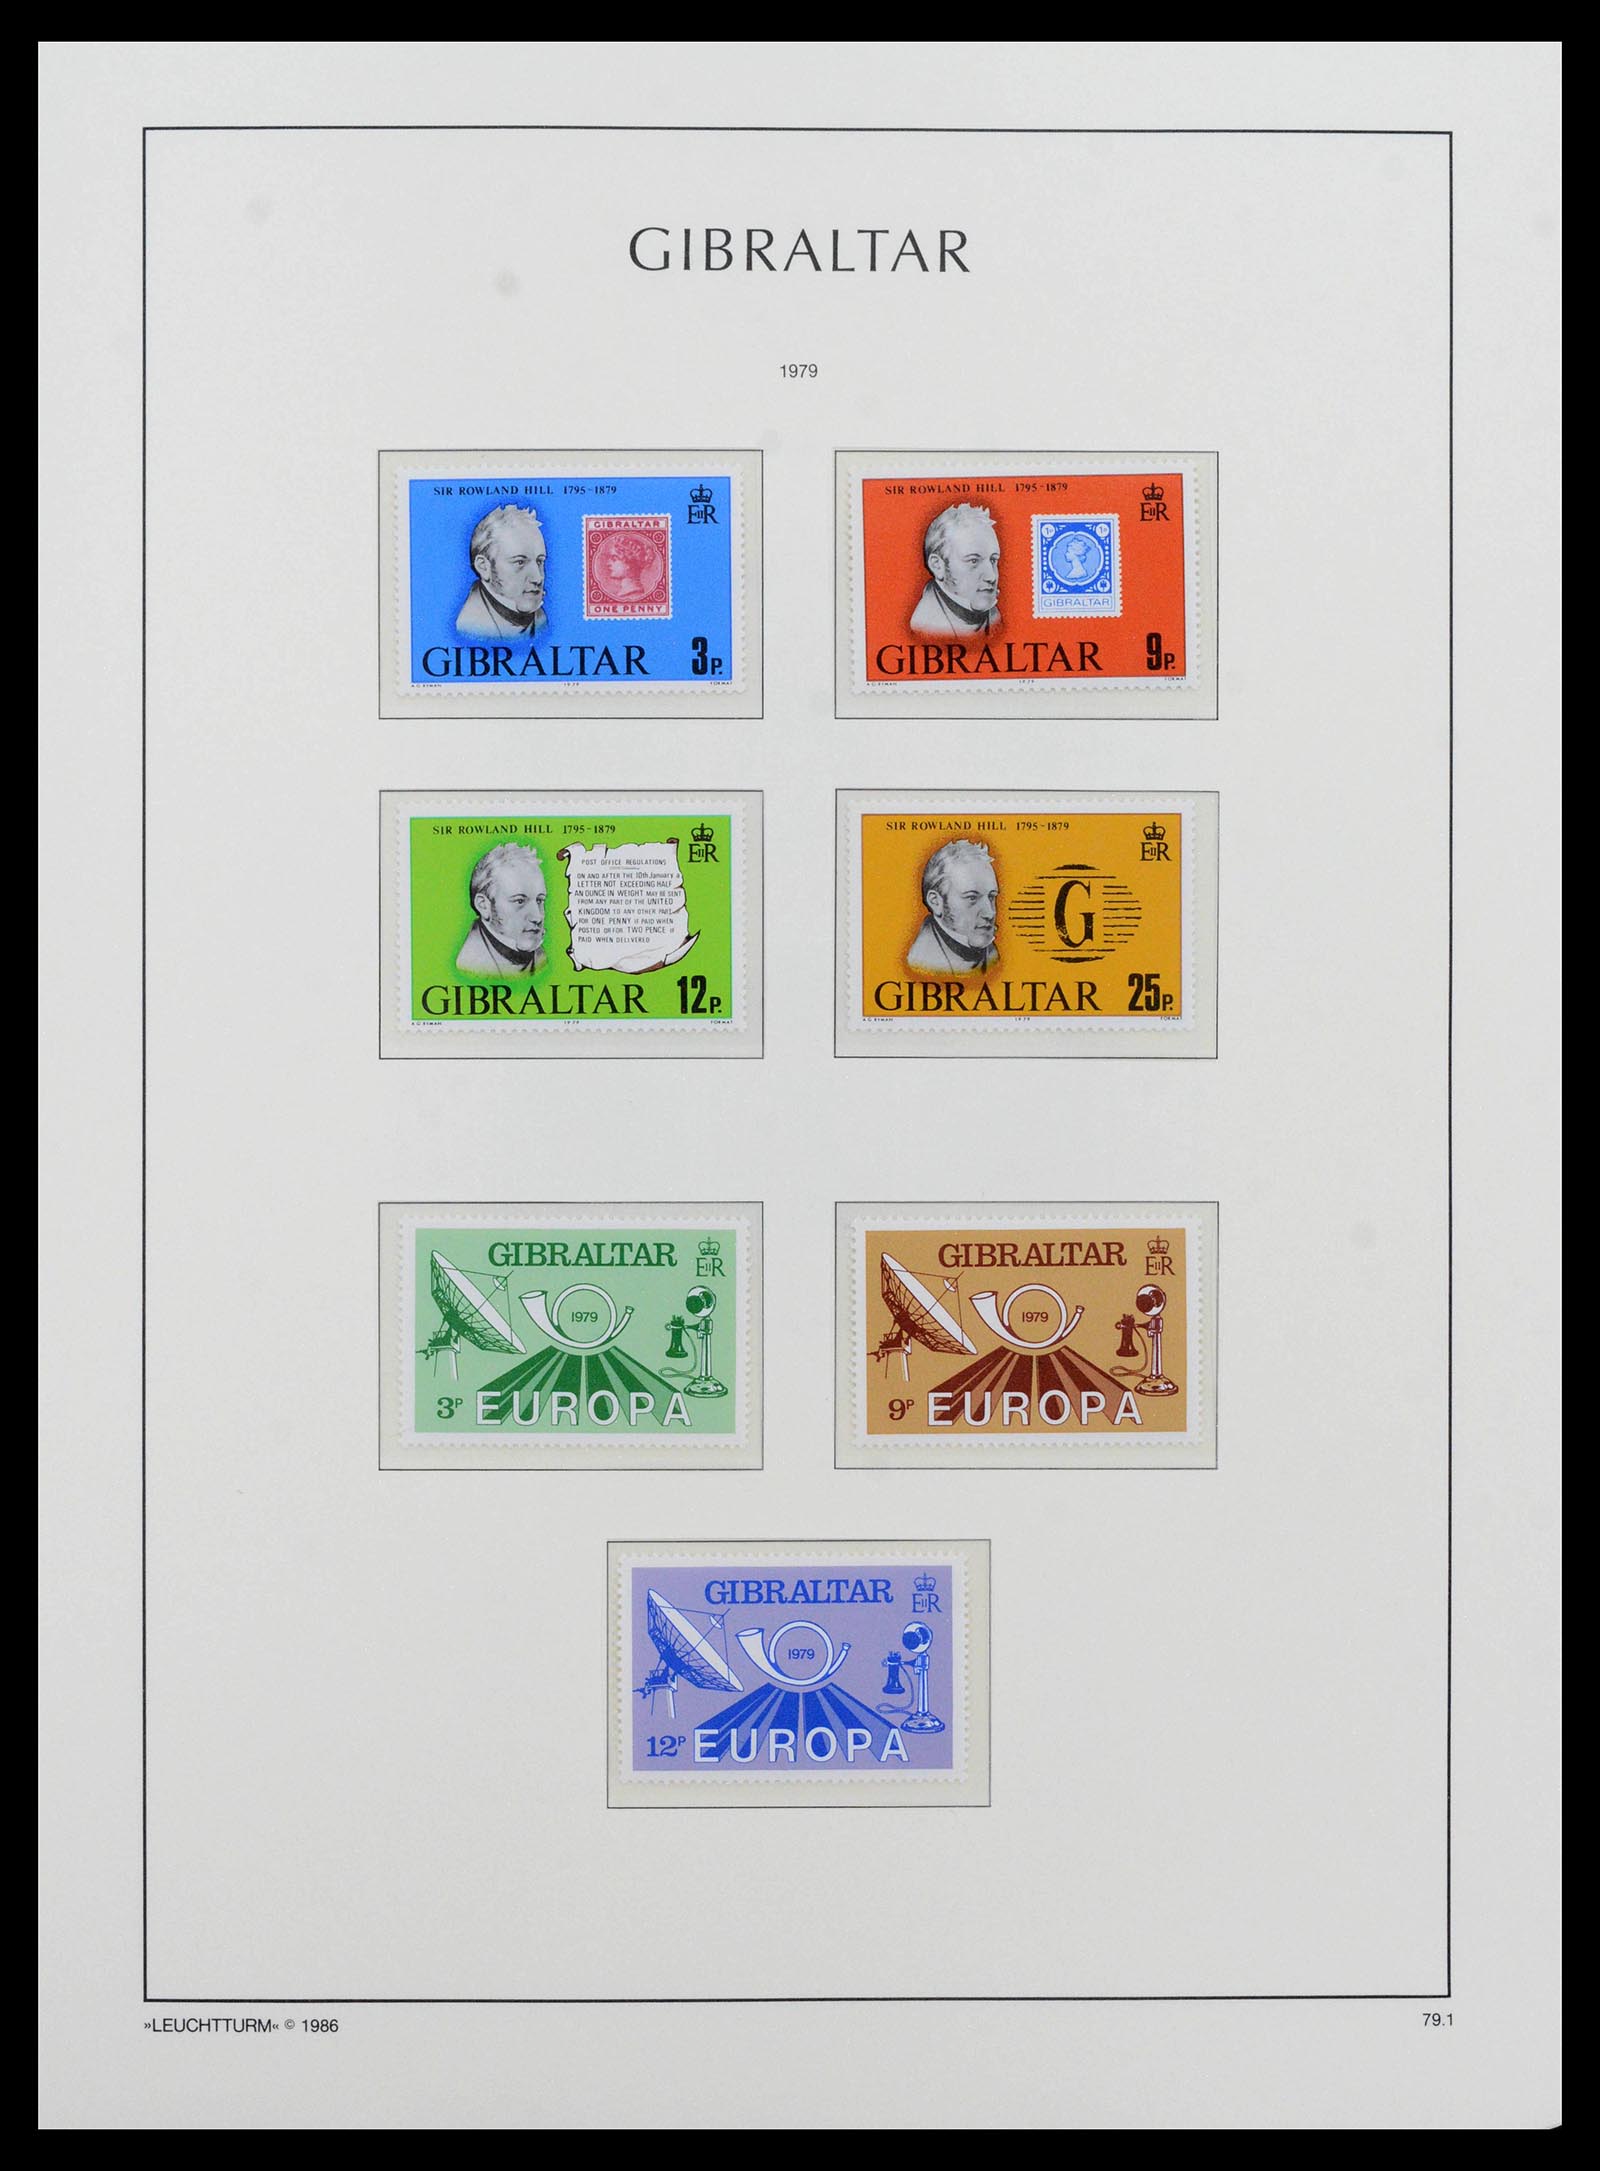 39158 0045 - Stamp collection 39158 Gibraltar 1886-2013.